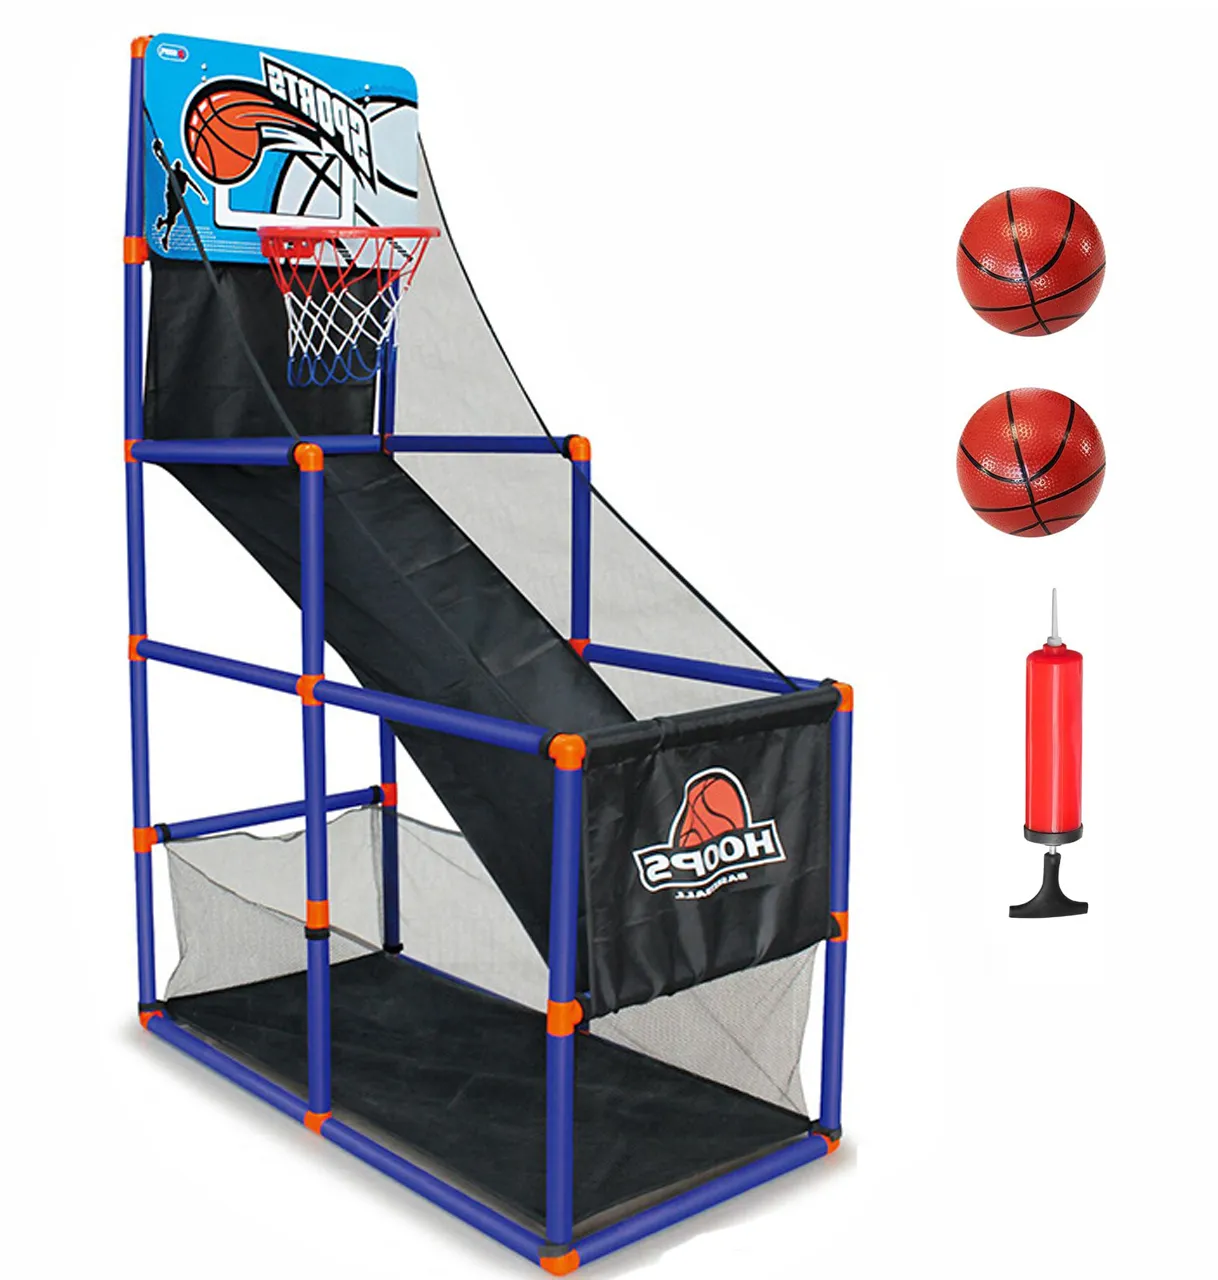 Källarleksaker Arcade Basketball Hoop Game Shootout Kids Inomhus utomhussport Toys Fun and Entertain Blue